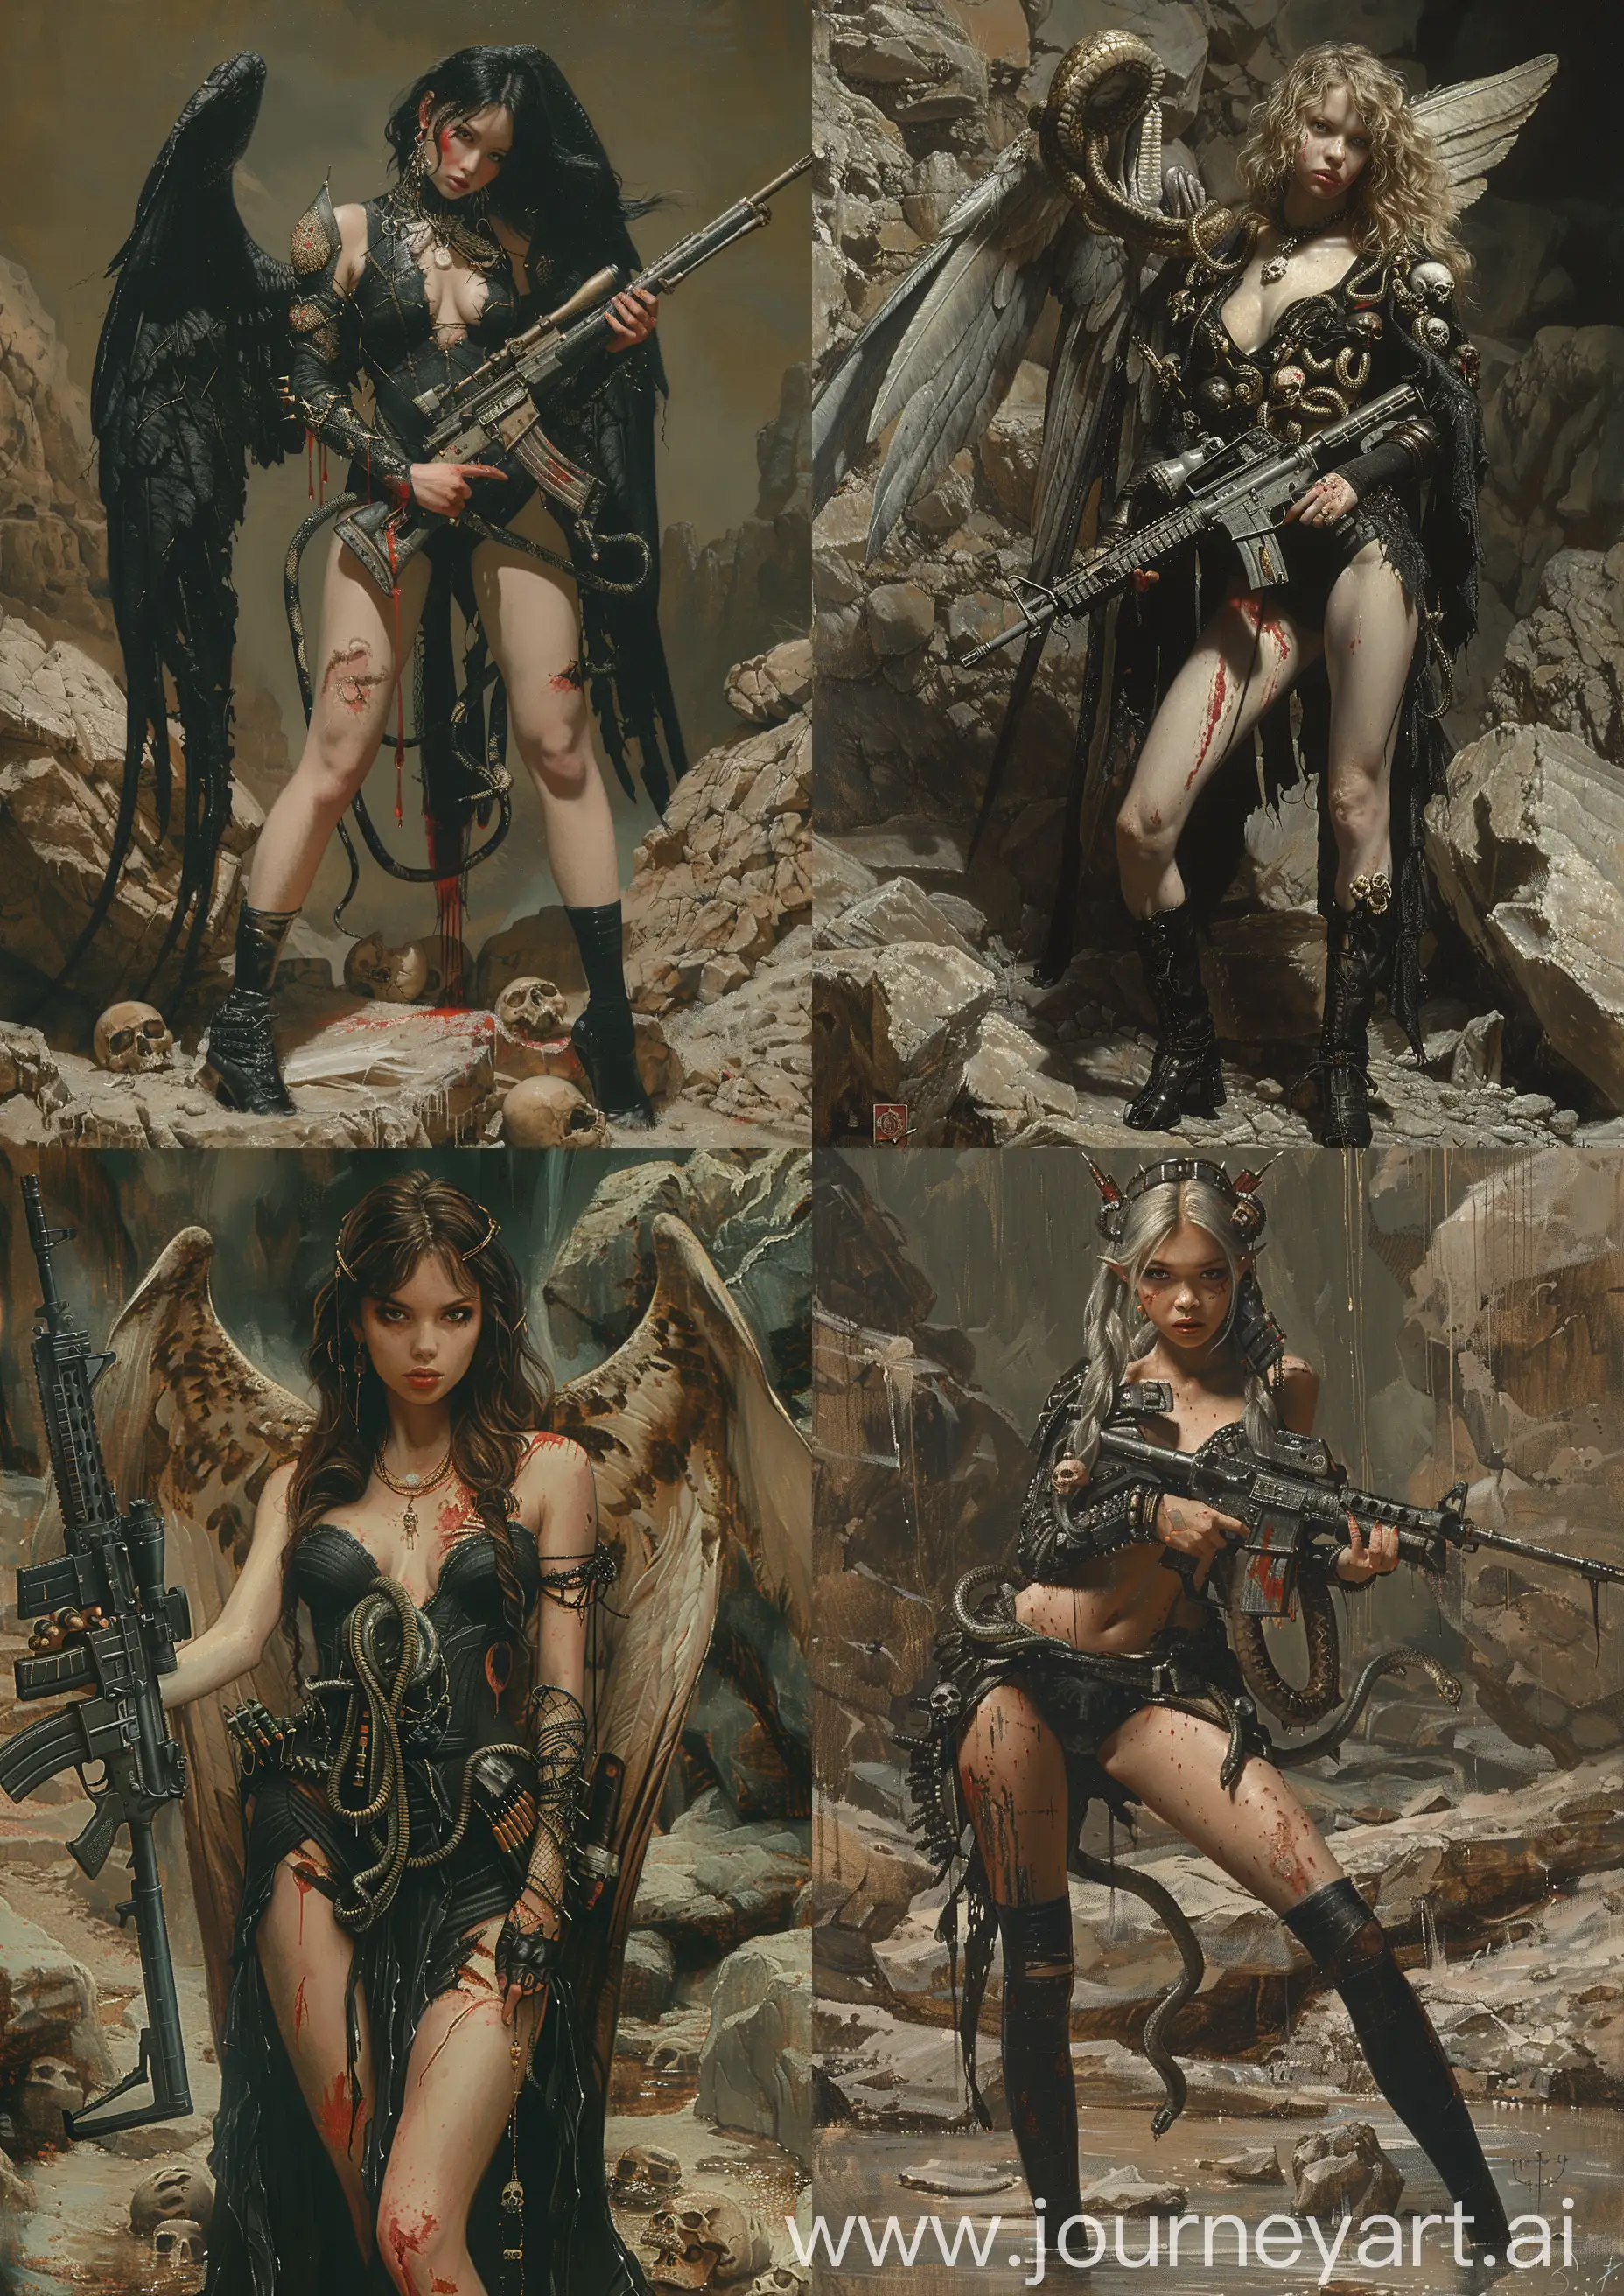 Futuristic-Female-Angel-Warrior-with-SciFi-Attire-and-M16-Rifle-on-Rocky-Terrain